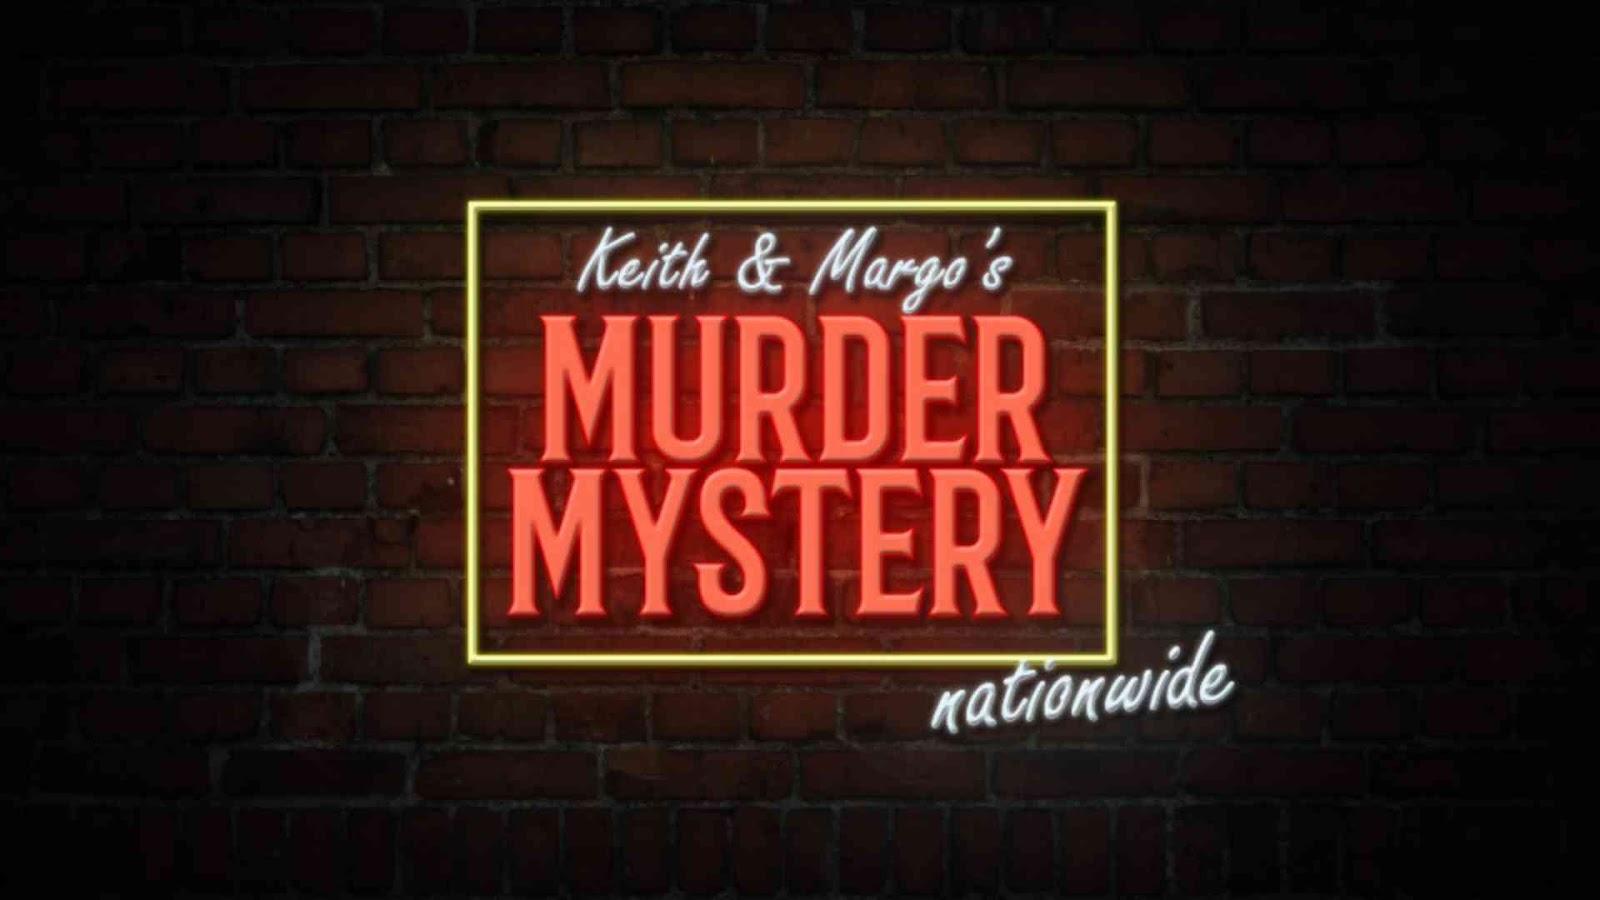 Keith & Margo’s Murder Mystery